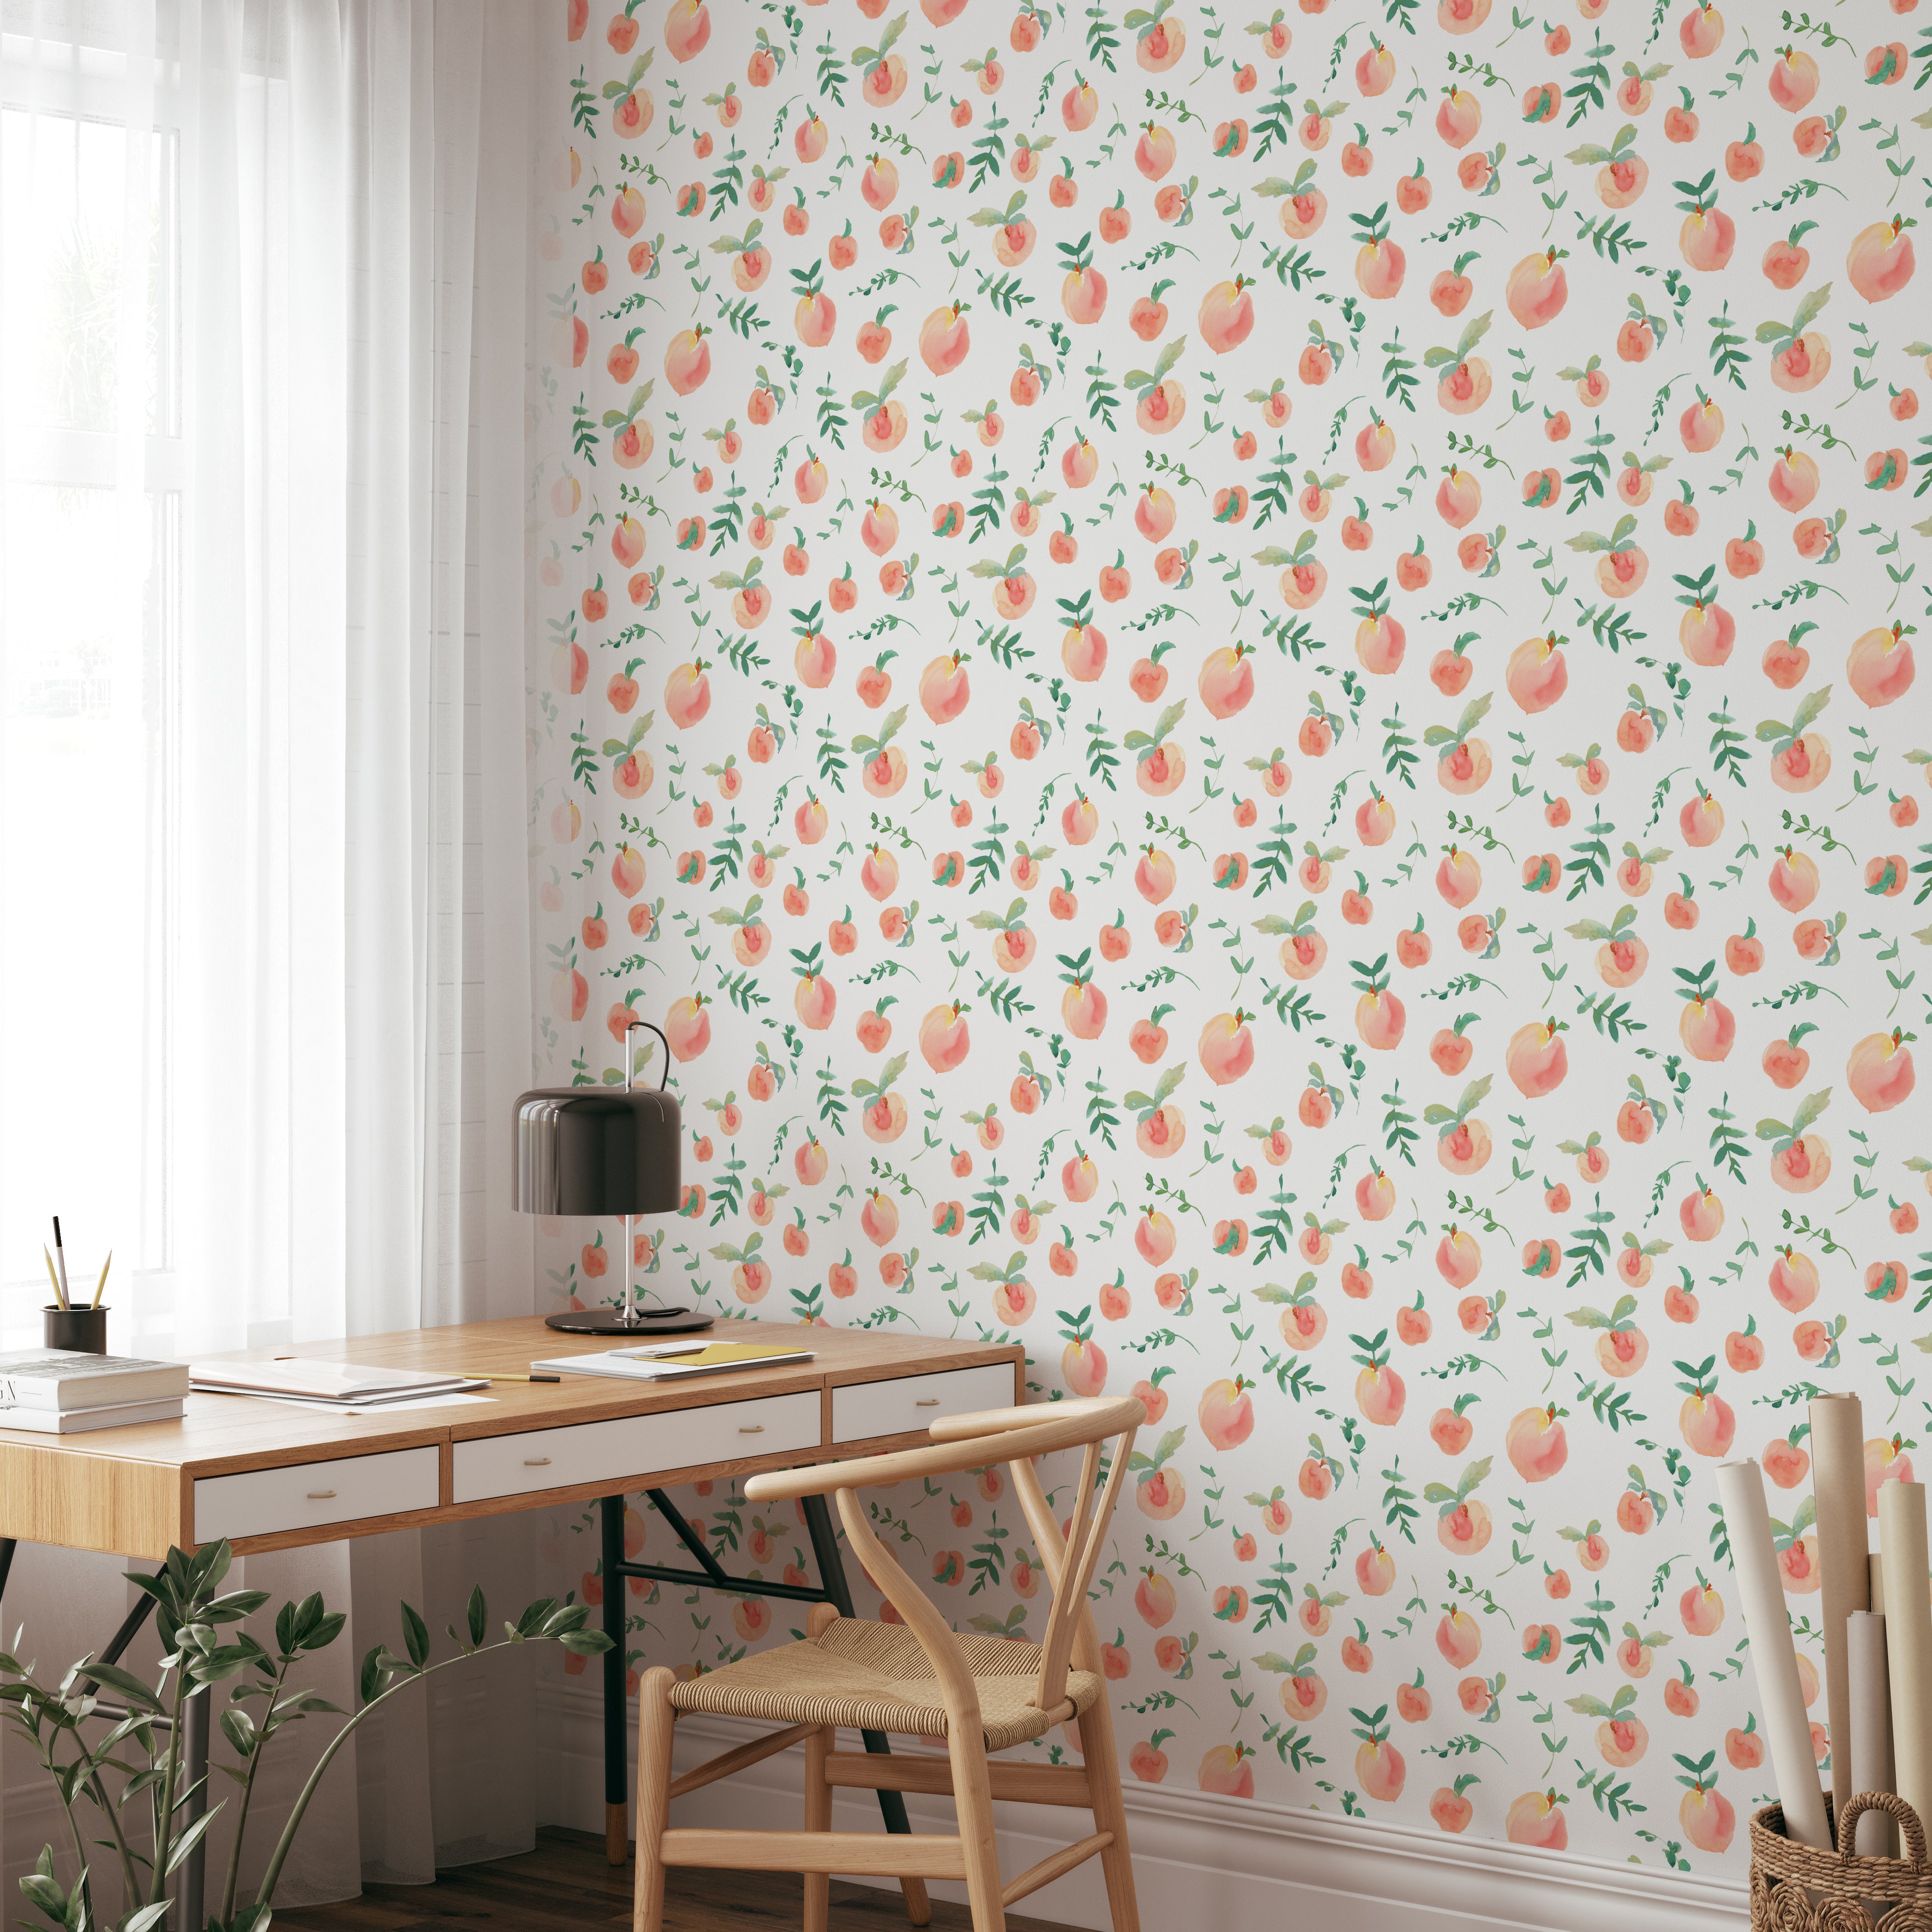 Peachy Clean - Fruit Wallpaper Wallpaper - Wall Blush from WALL BLUSH